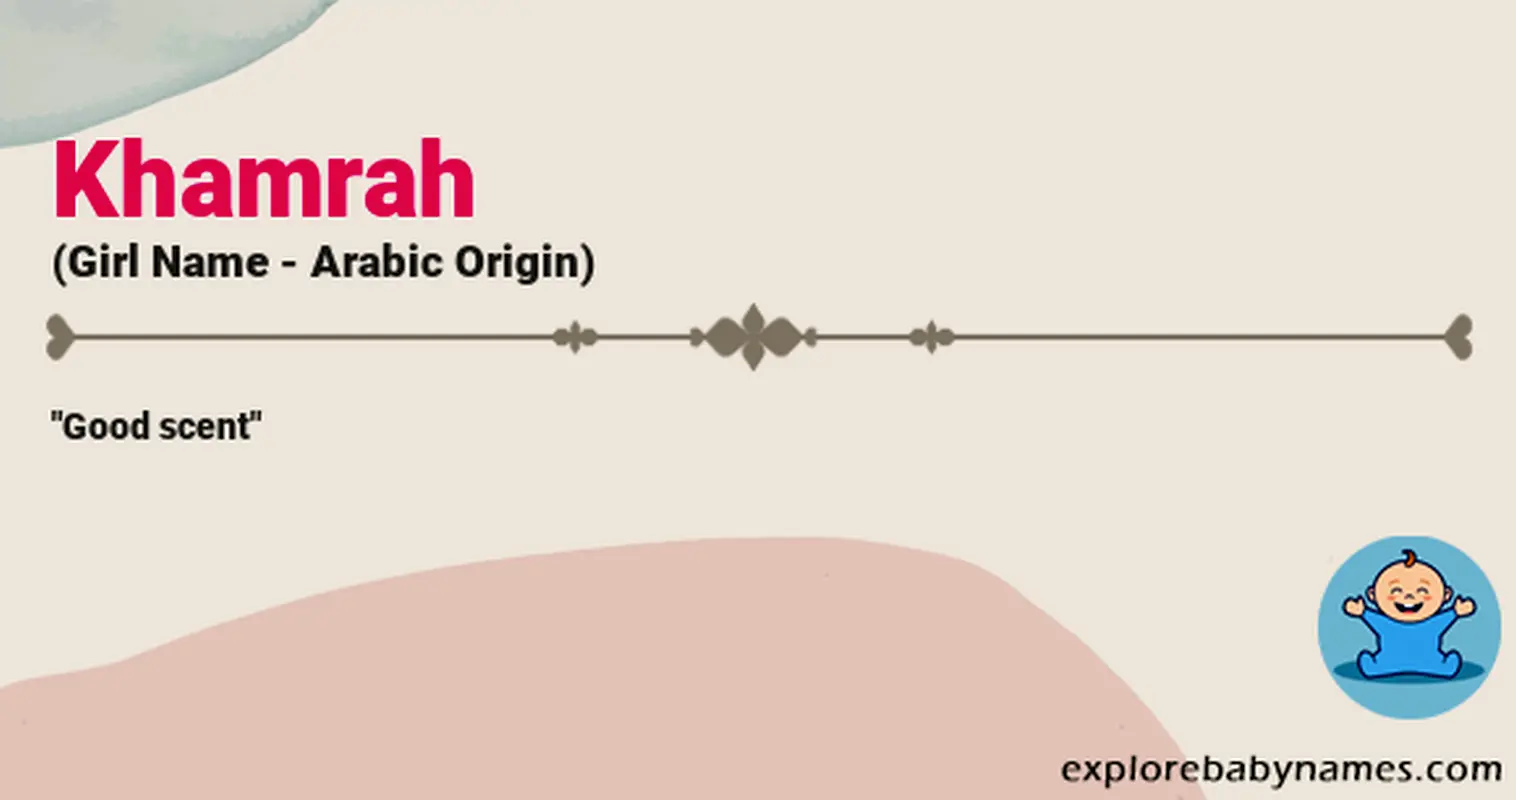 Meaning of Khamrah